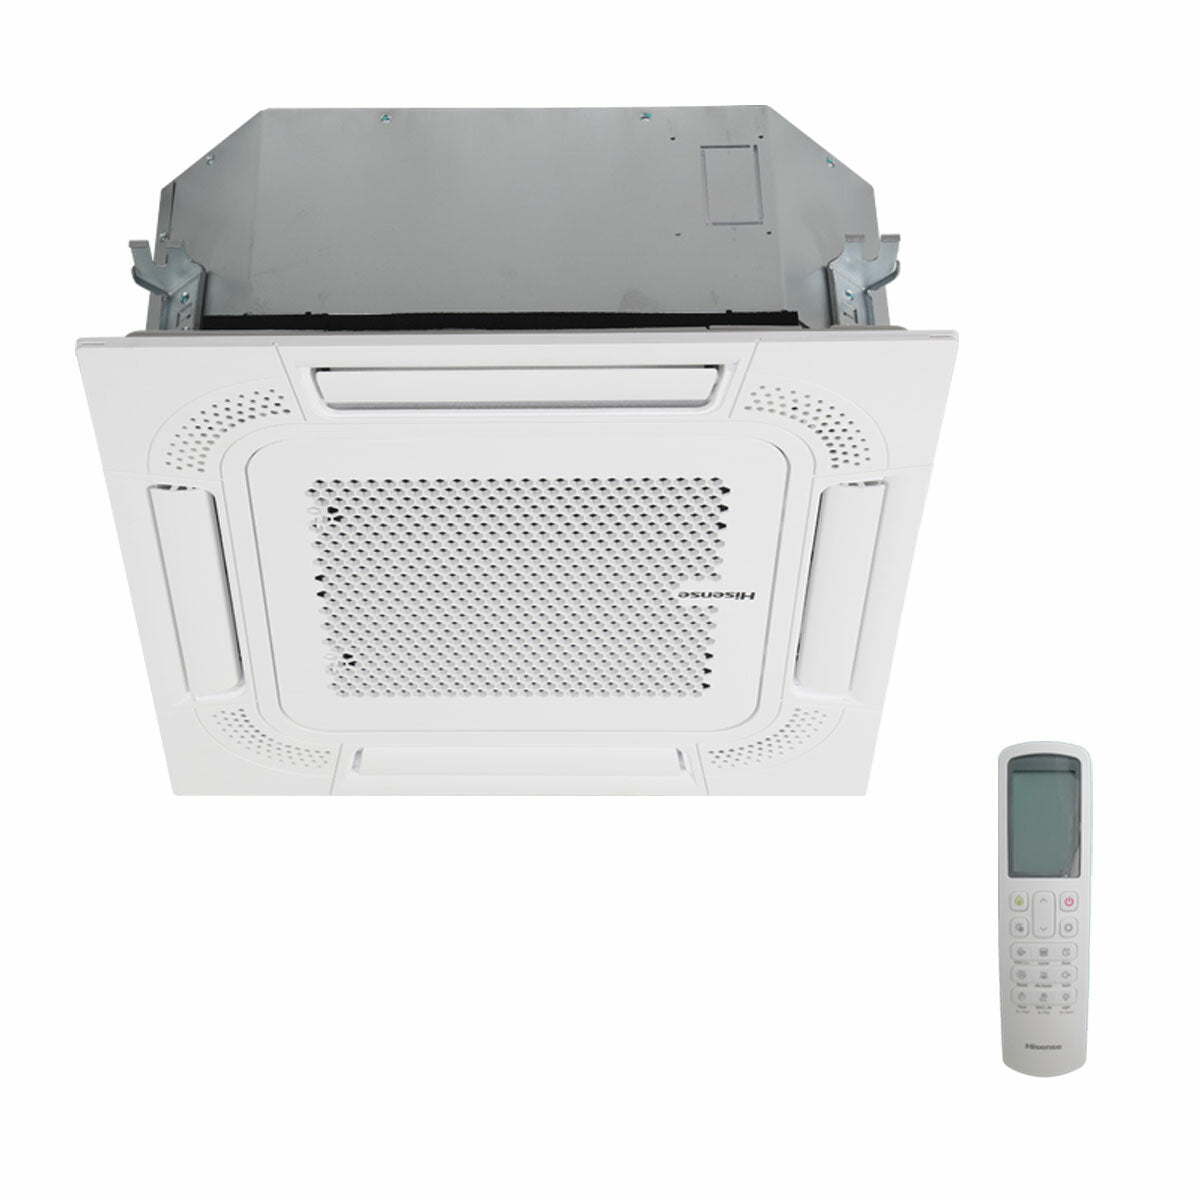 Hisense air conditioner Cassette ACT trial split 9000+9000+18000 BTU inverter A++ outdoor unit 7 kW